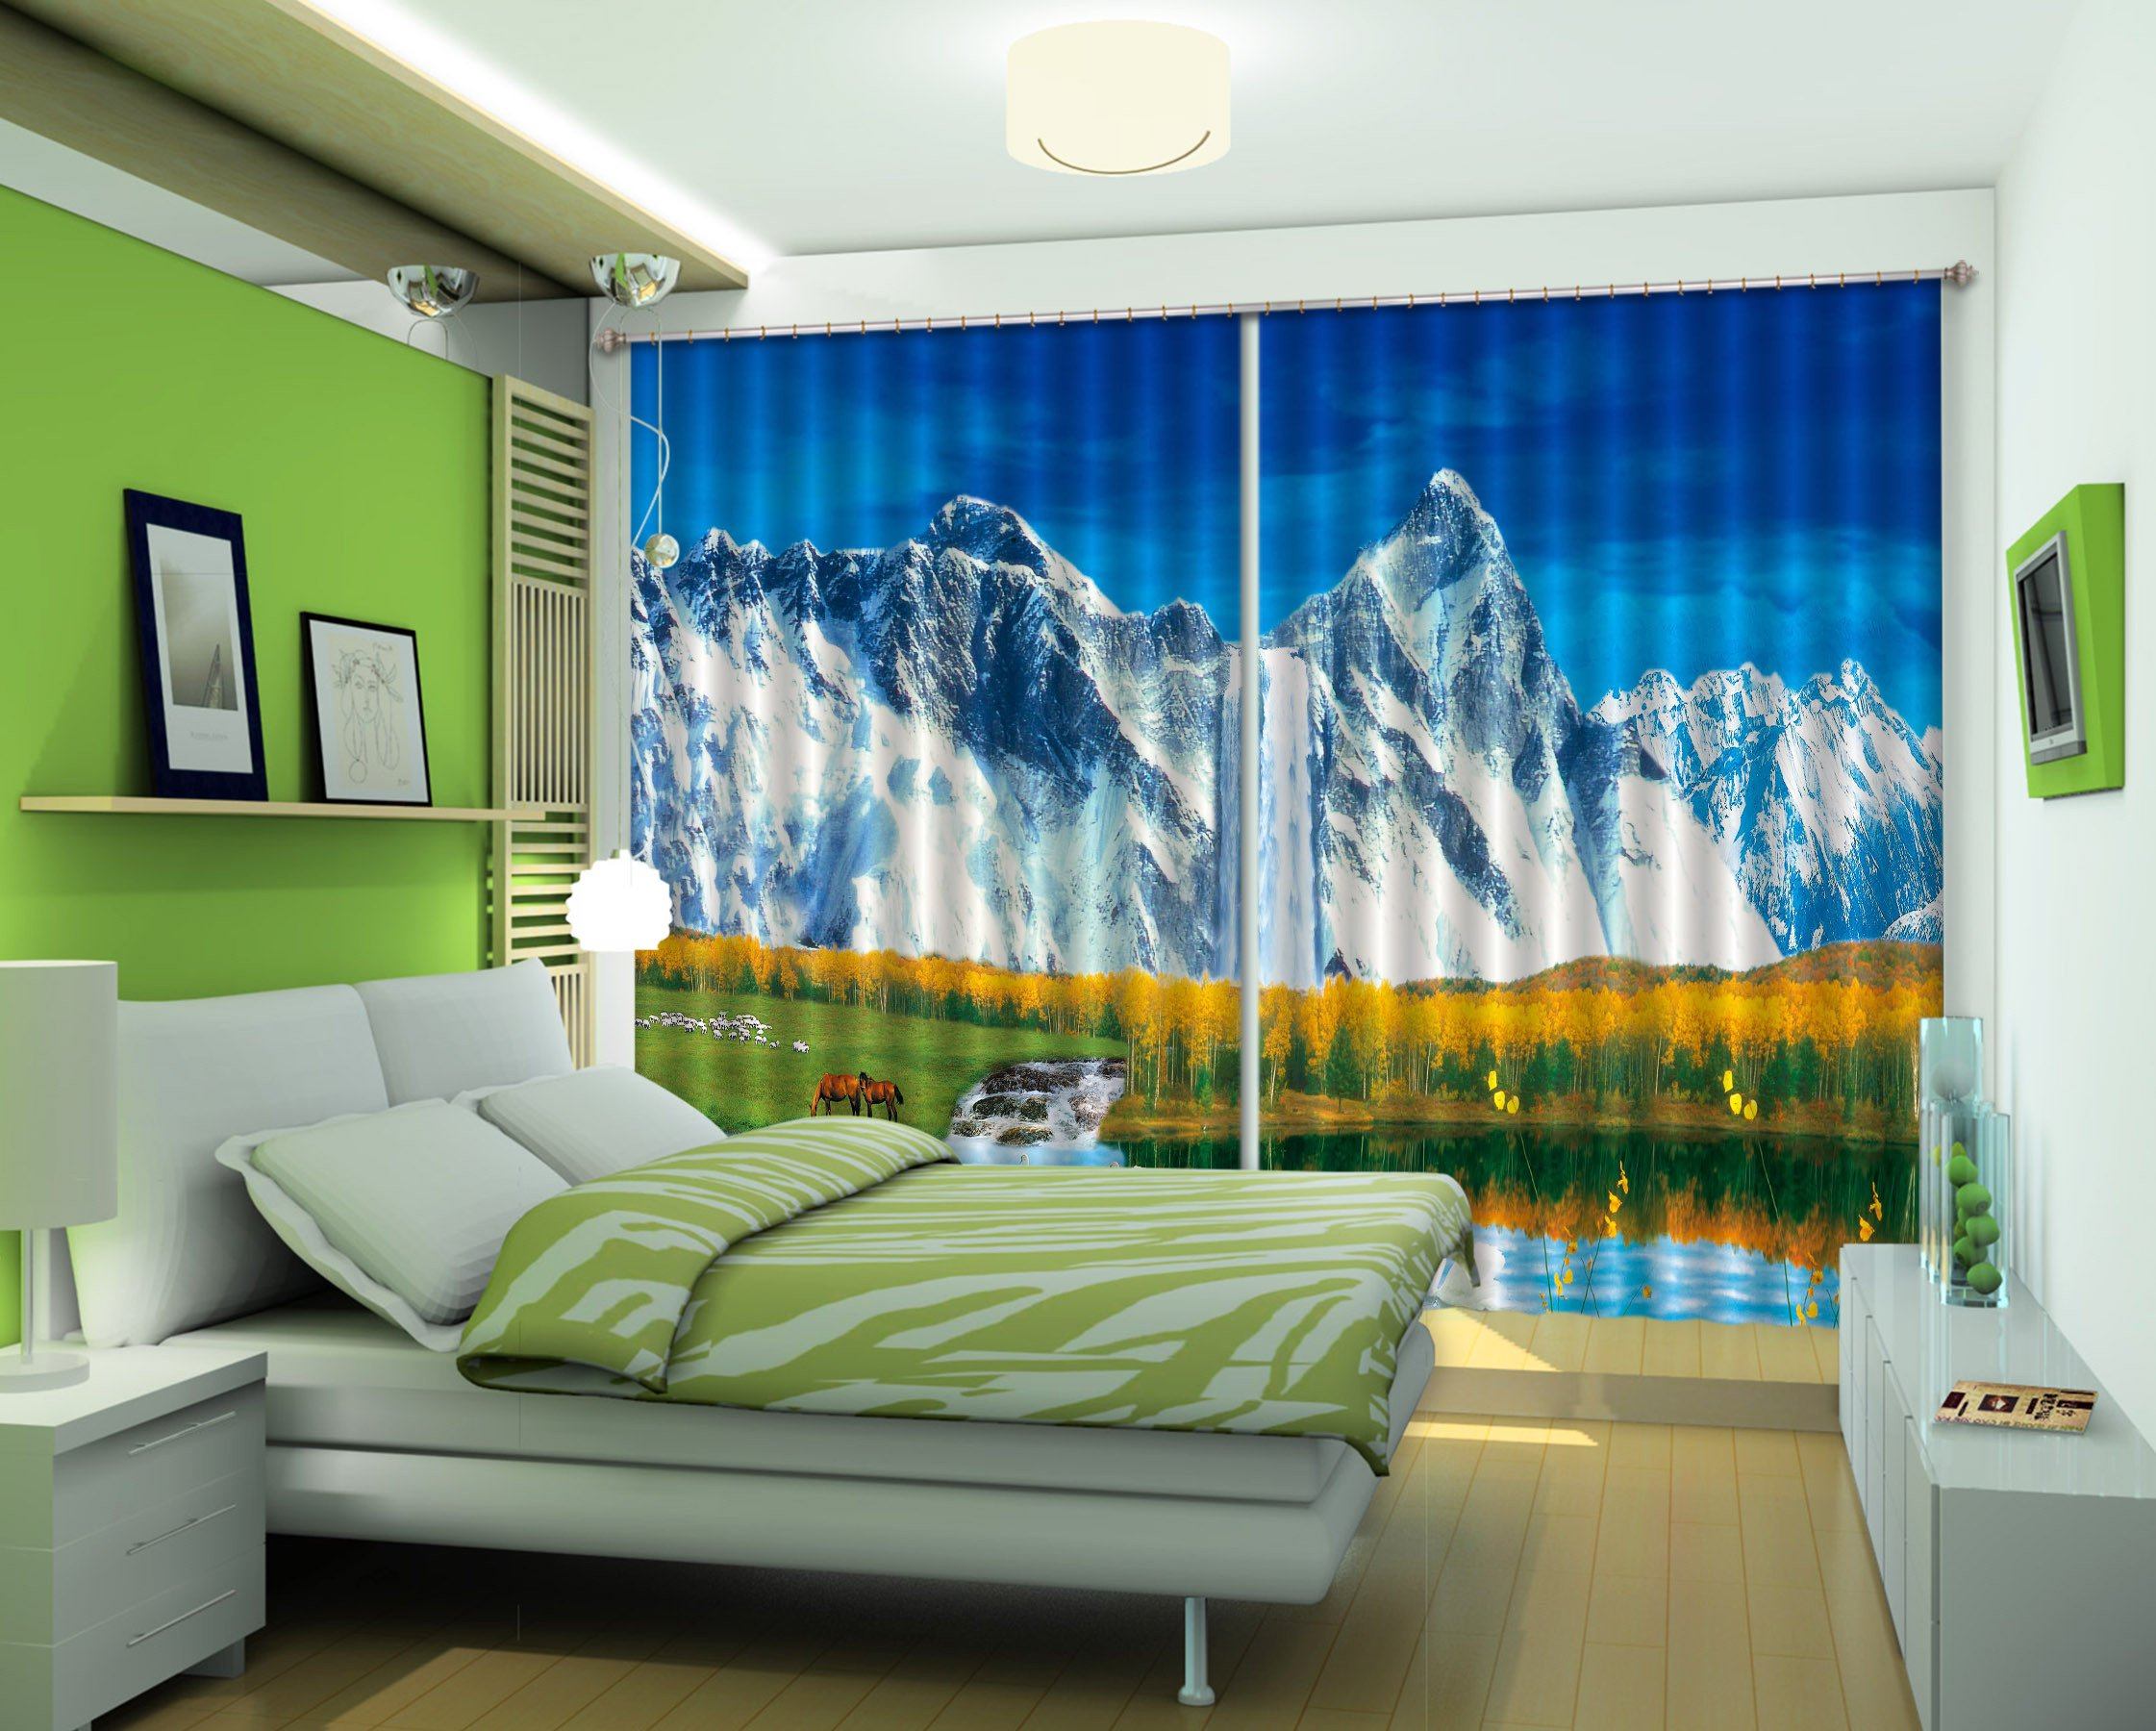 3D Snow Mountain Ranch Animals Curtains Drapes Wallpaper AJ Wallpaper 